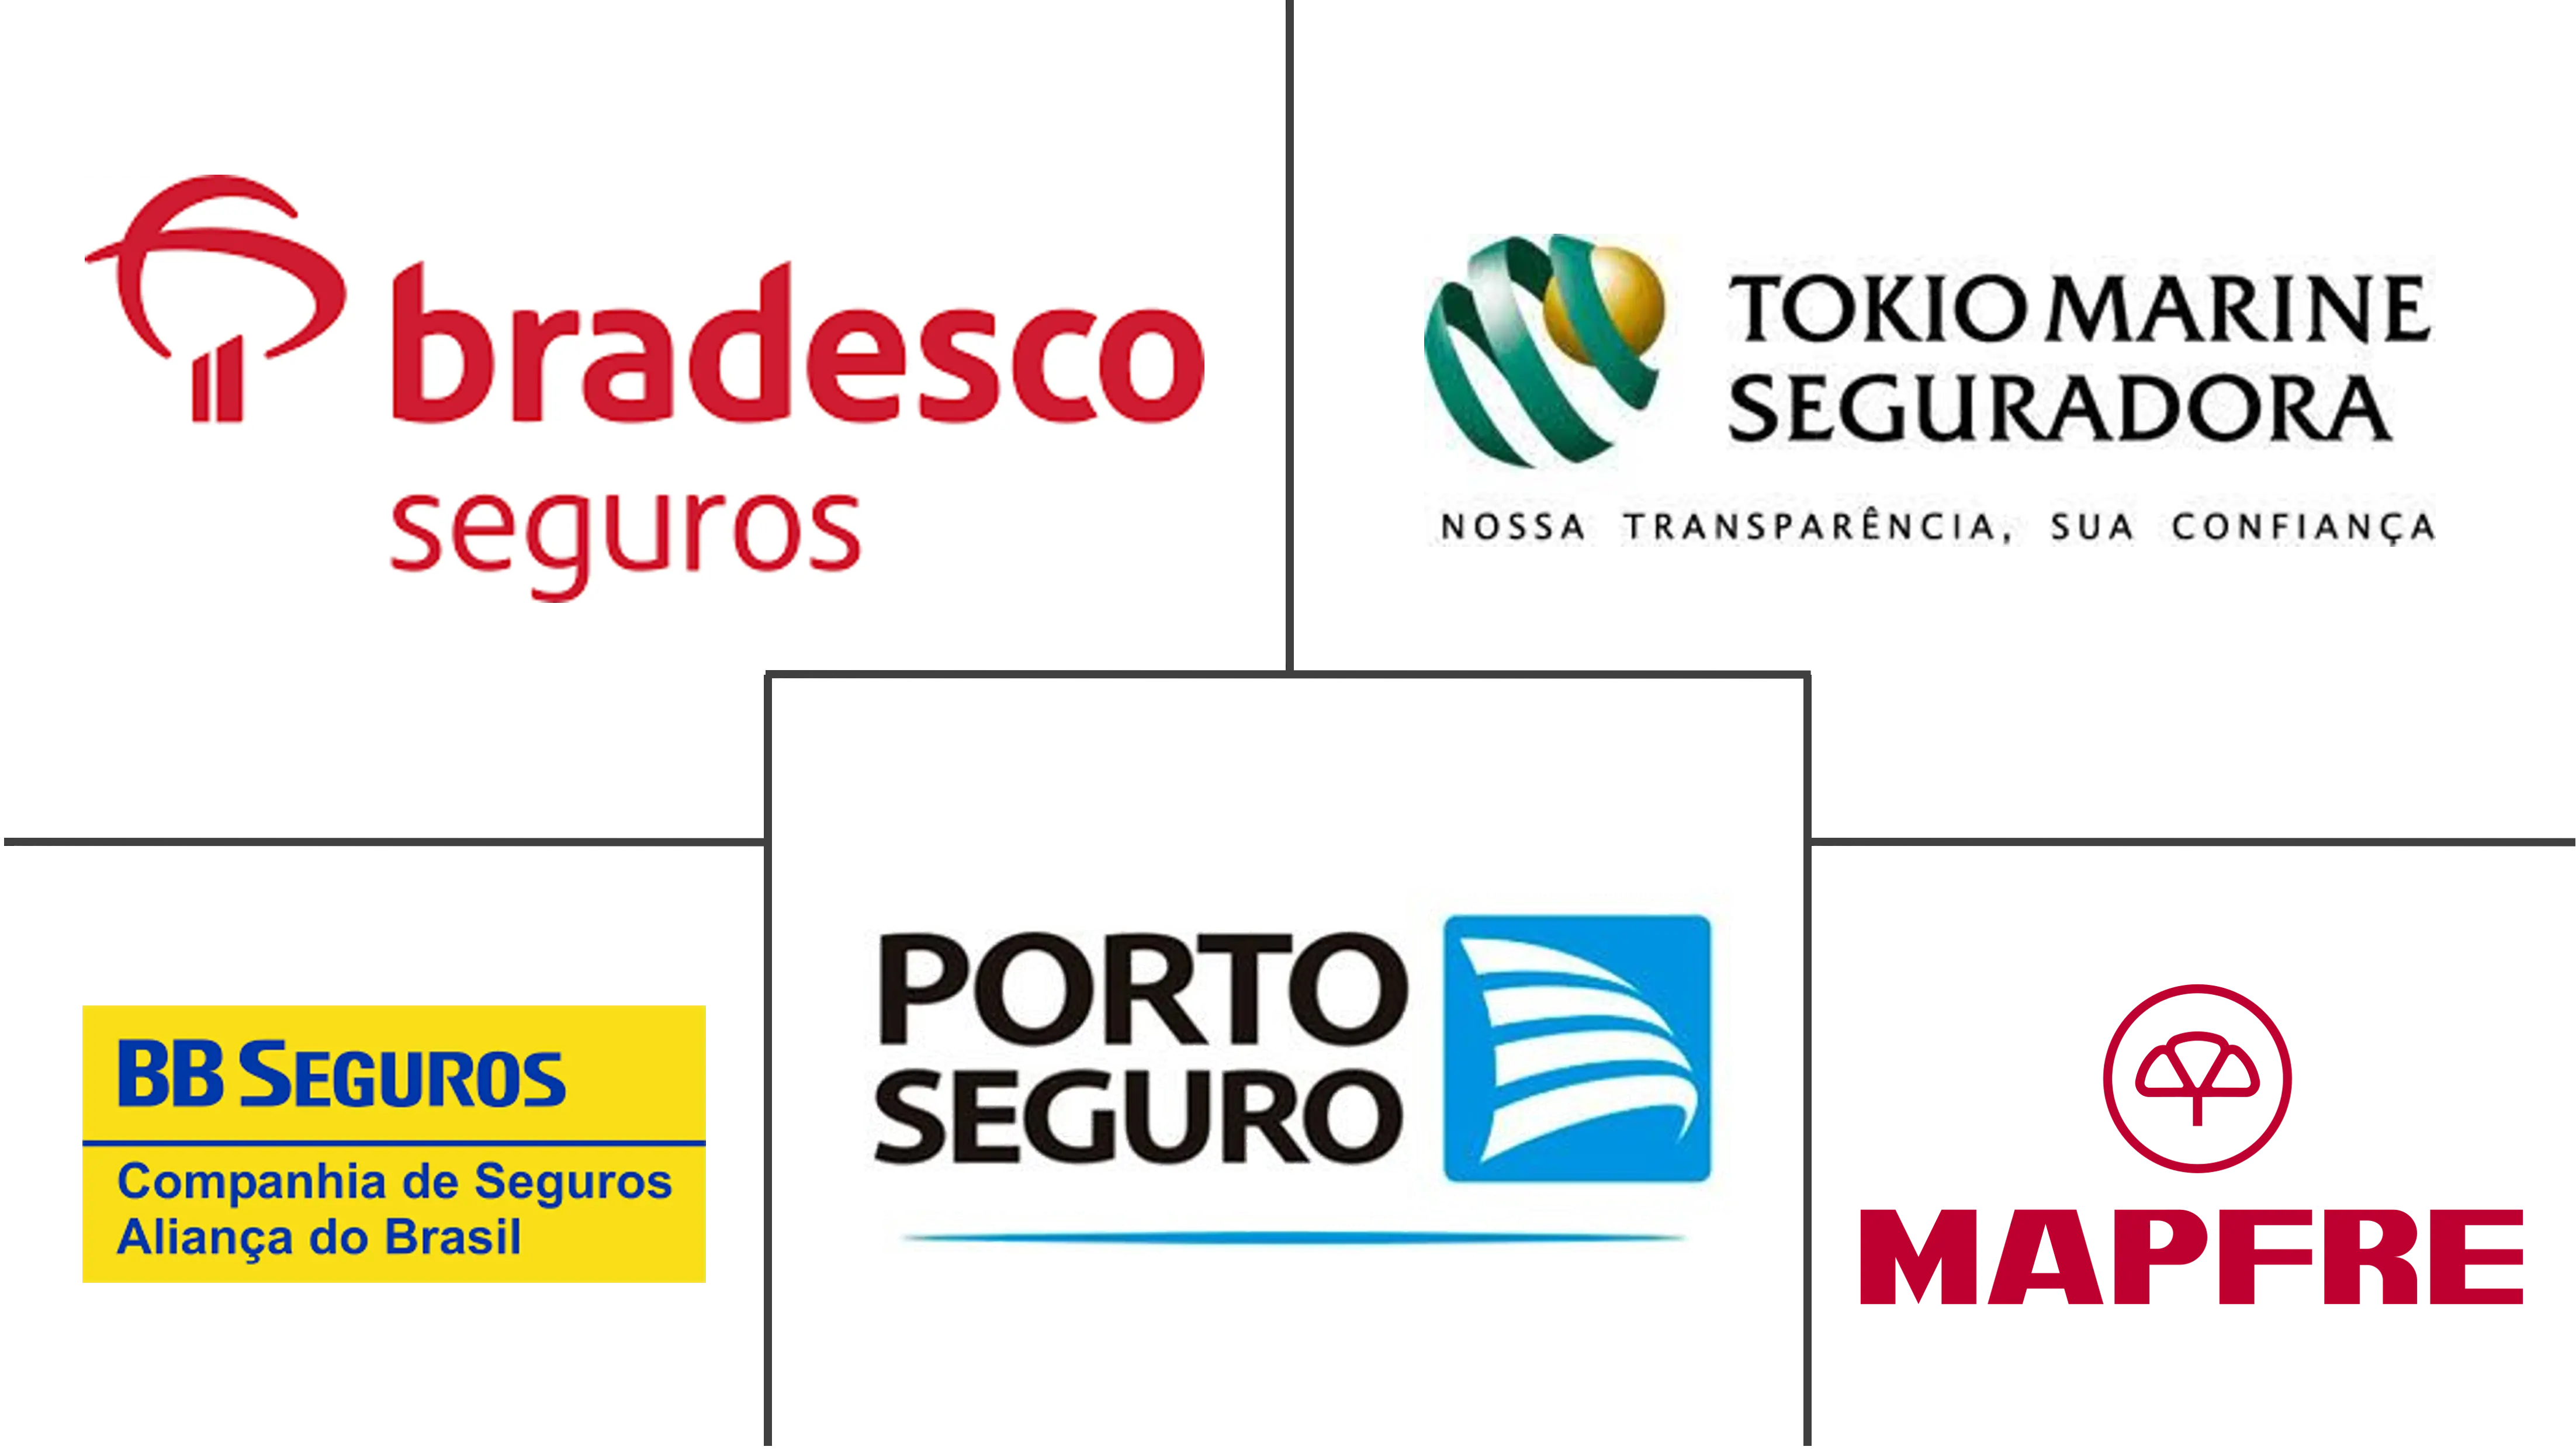 Brazil Life Insurance and Non-life Insurance Market Major Players